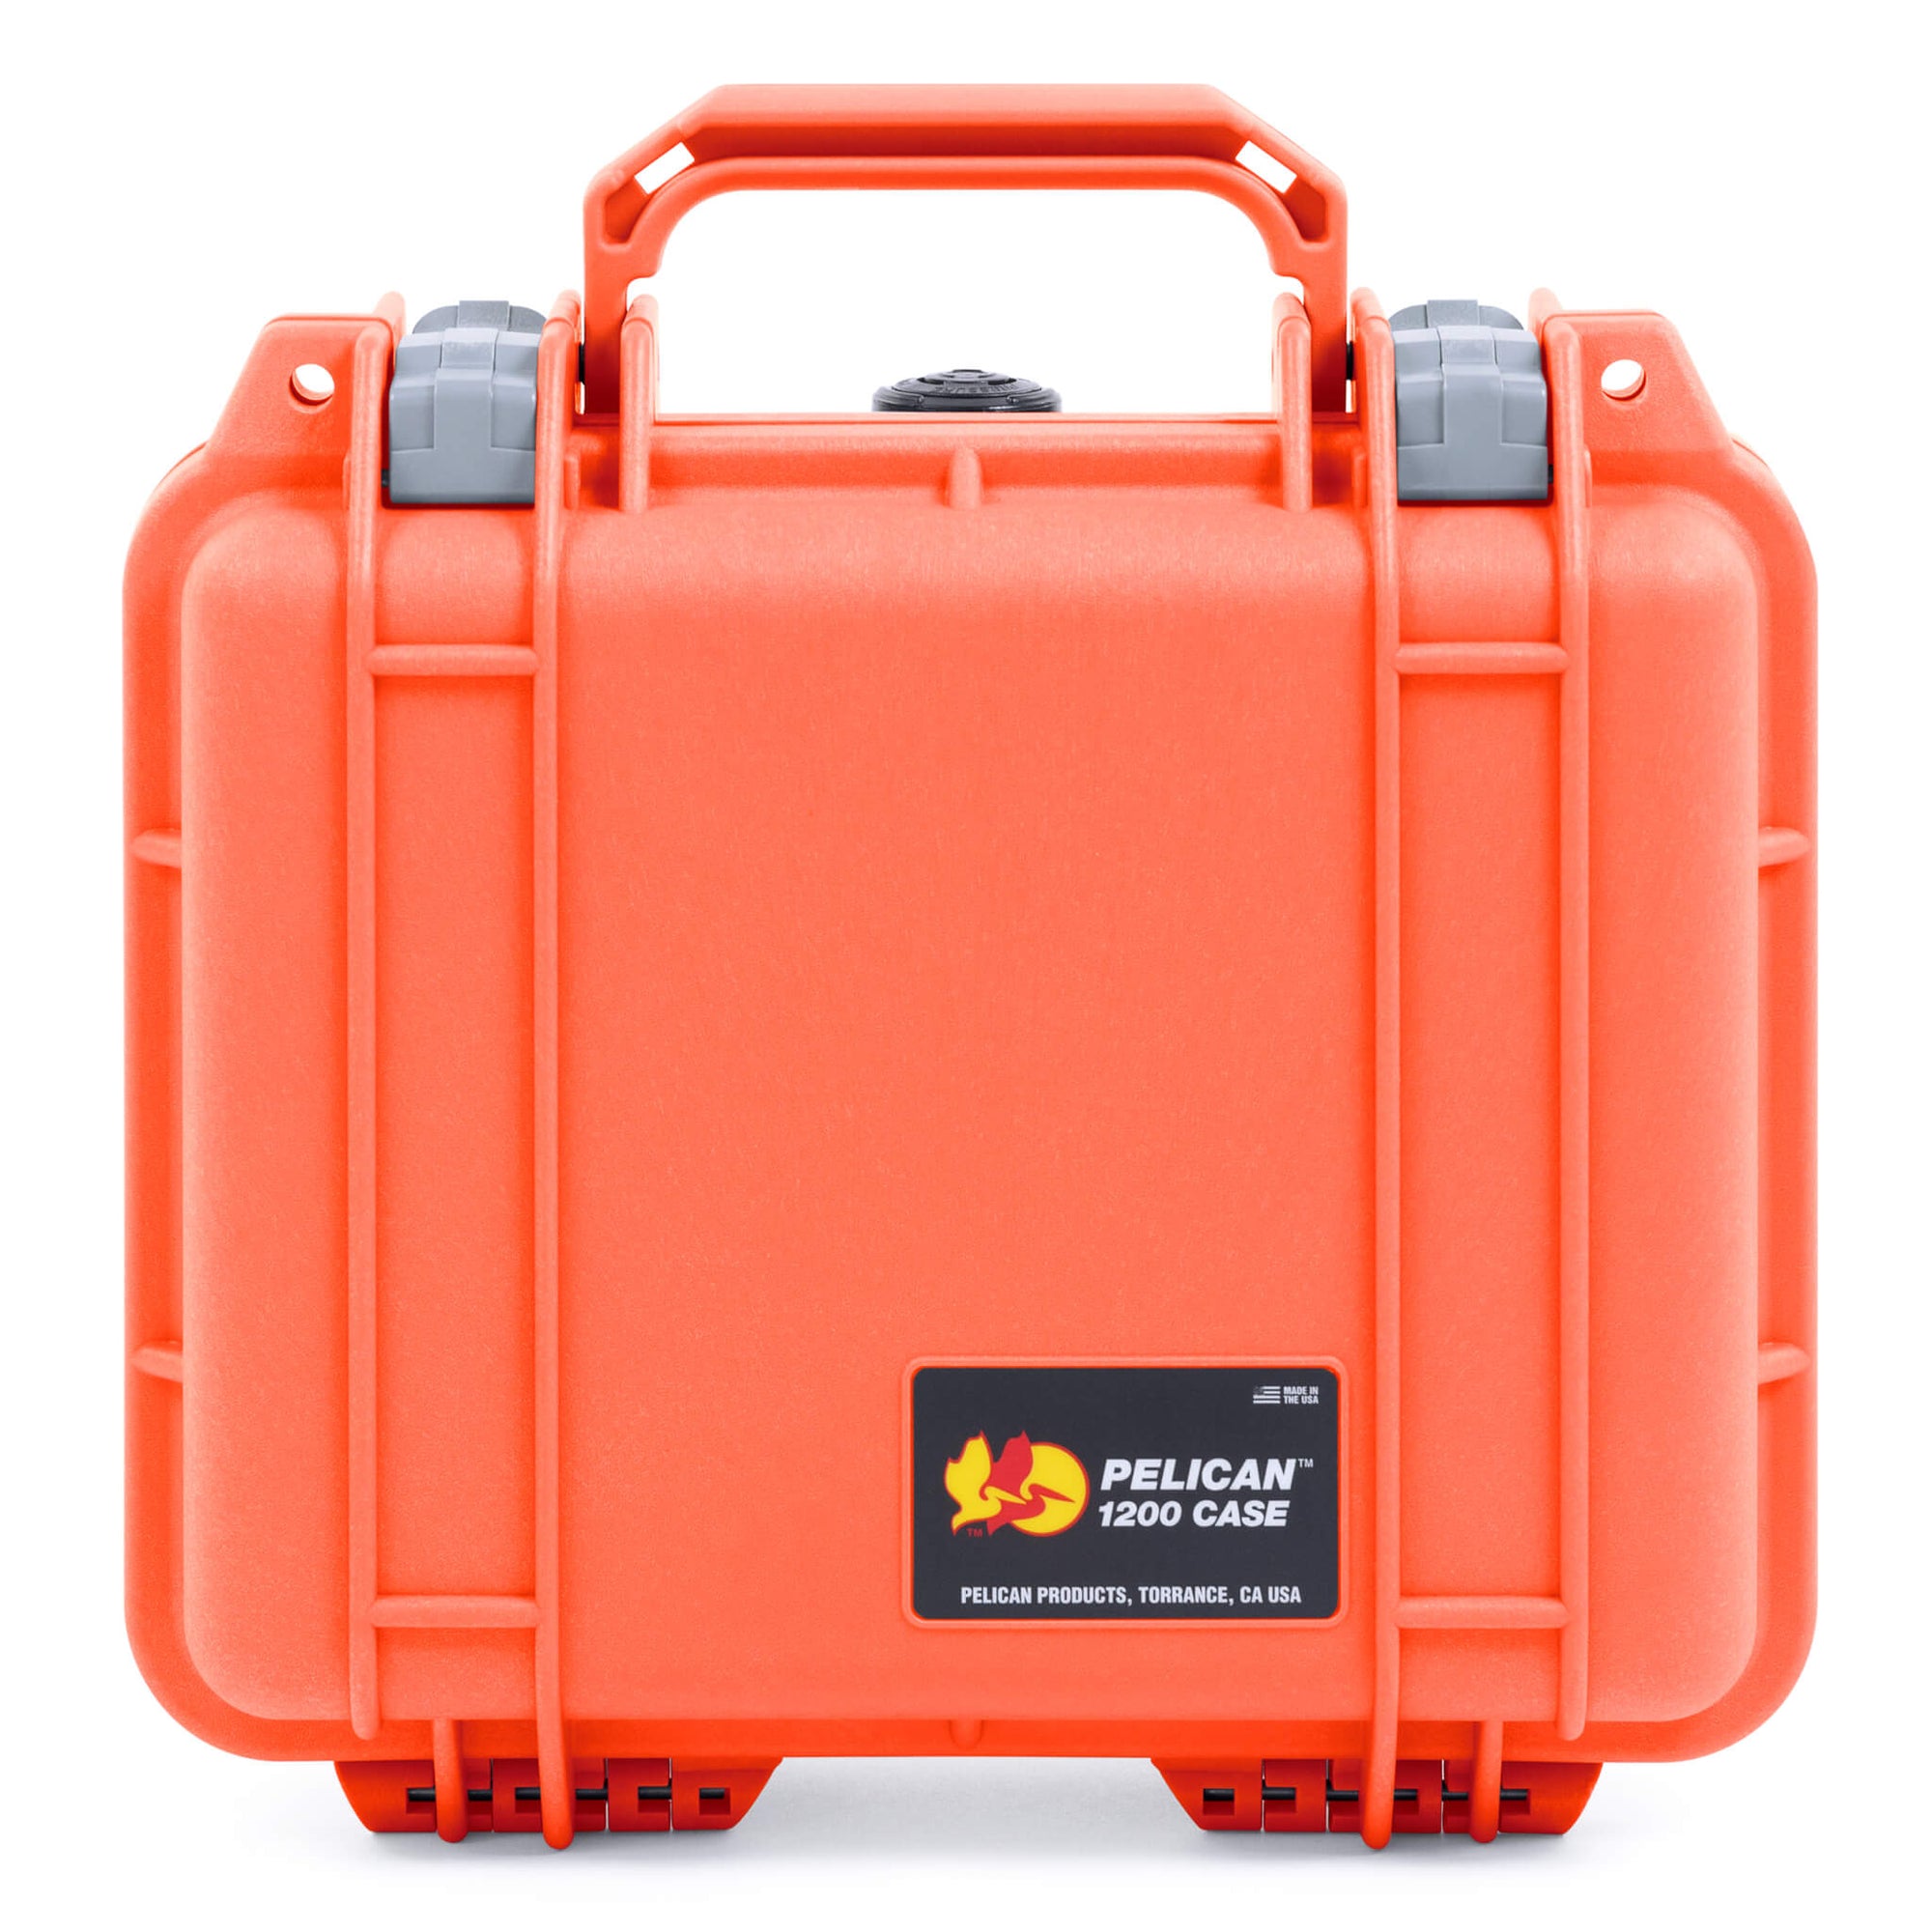 Pelican 1200 Case, Orange with Silver Latches ColorCase 